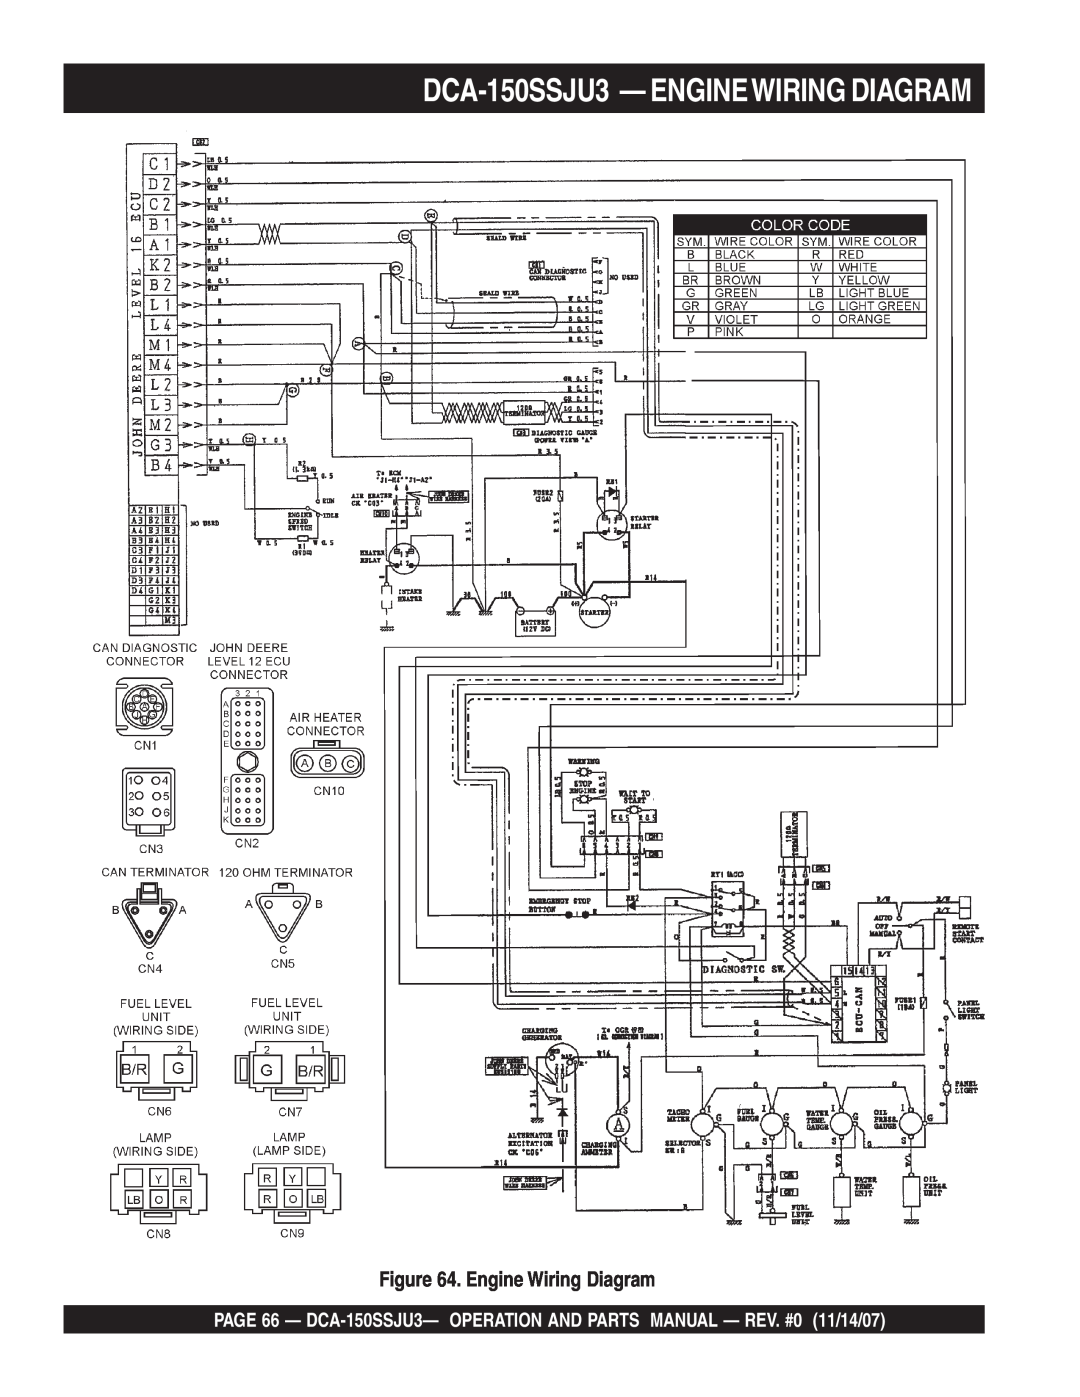 Multiquip operation manual DCA-150SSJU3— ENGINEWIRING DIAGRAM, Engine Wiring Diagram 